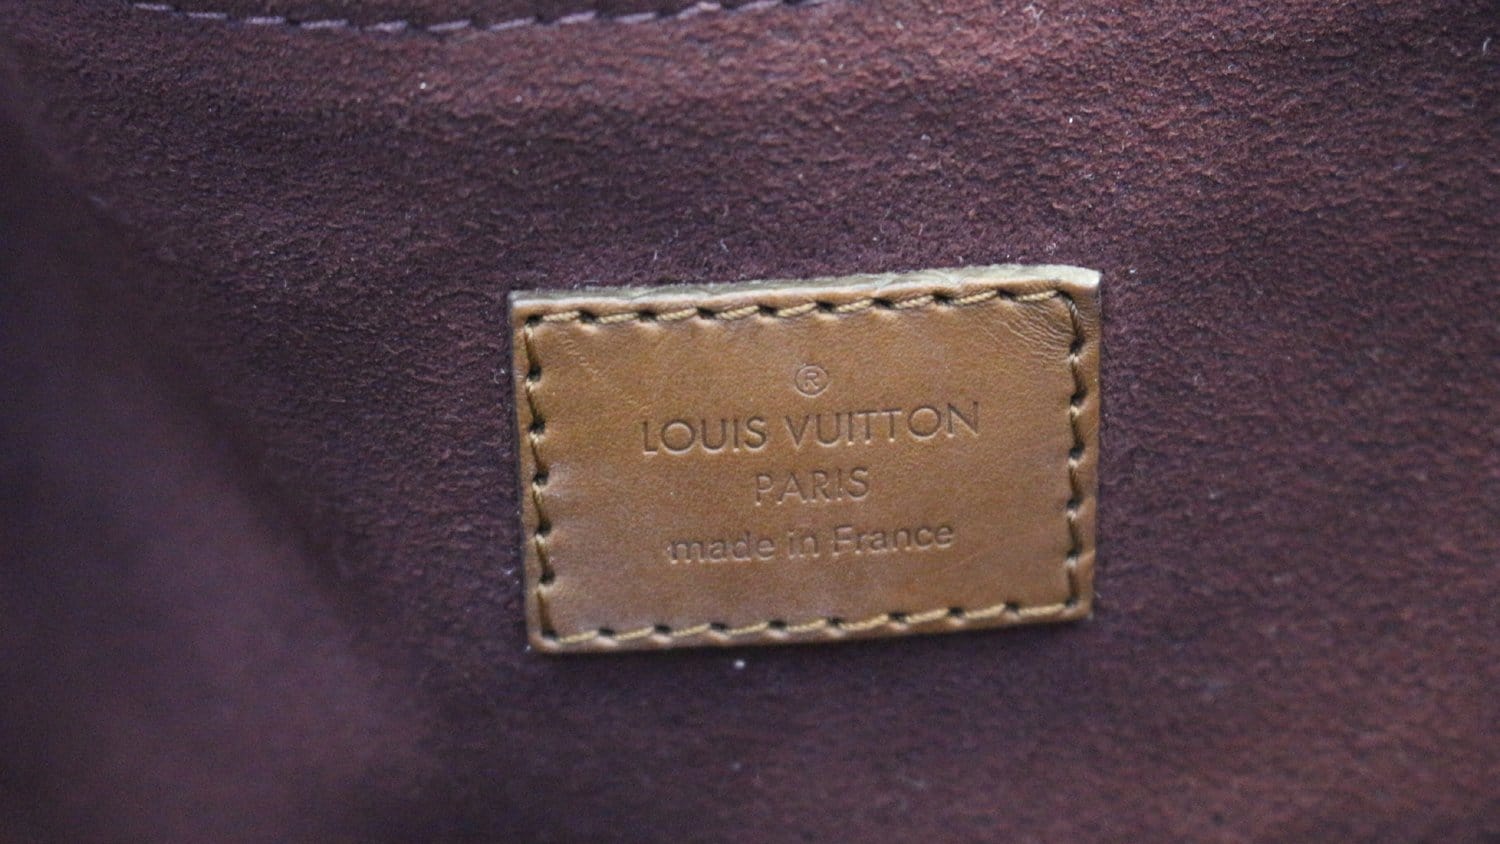 SOLD Louis Vuitton Ascot Damier Ebene Bag